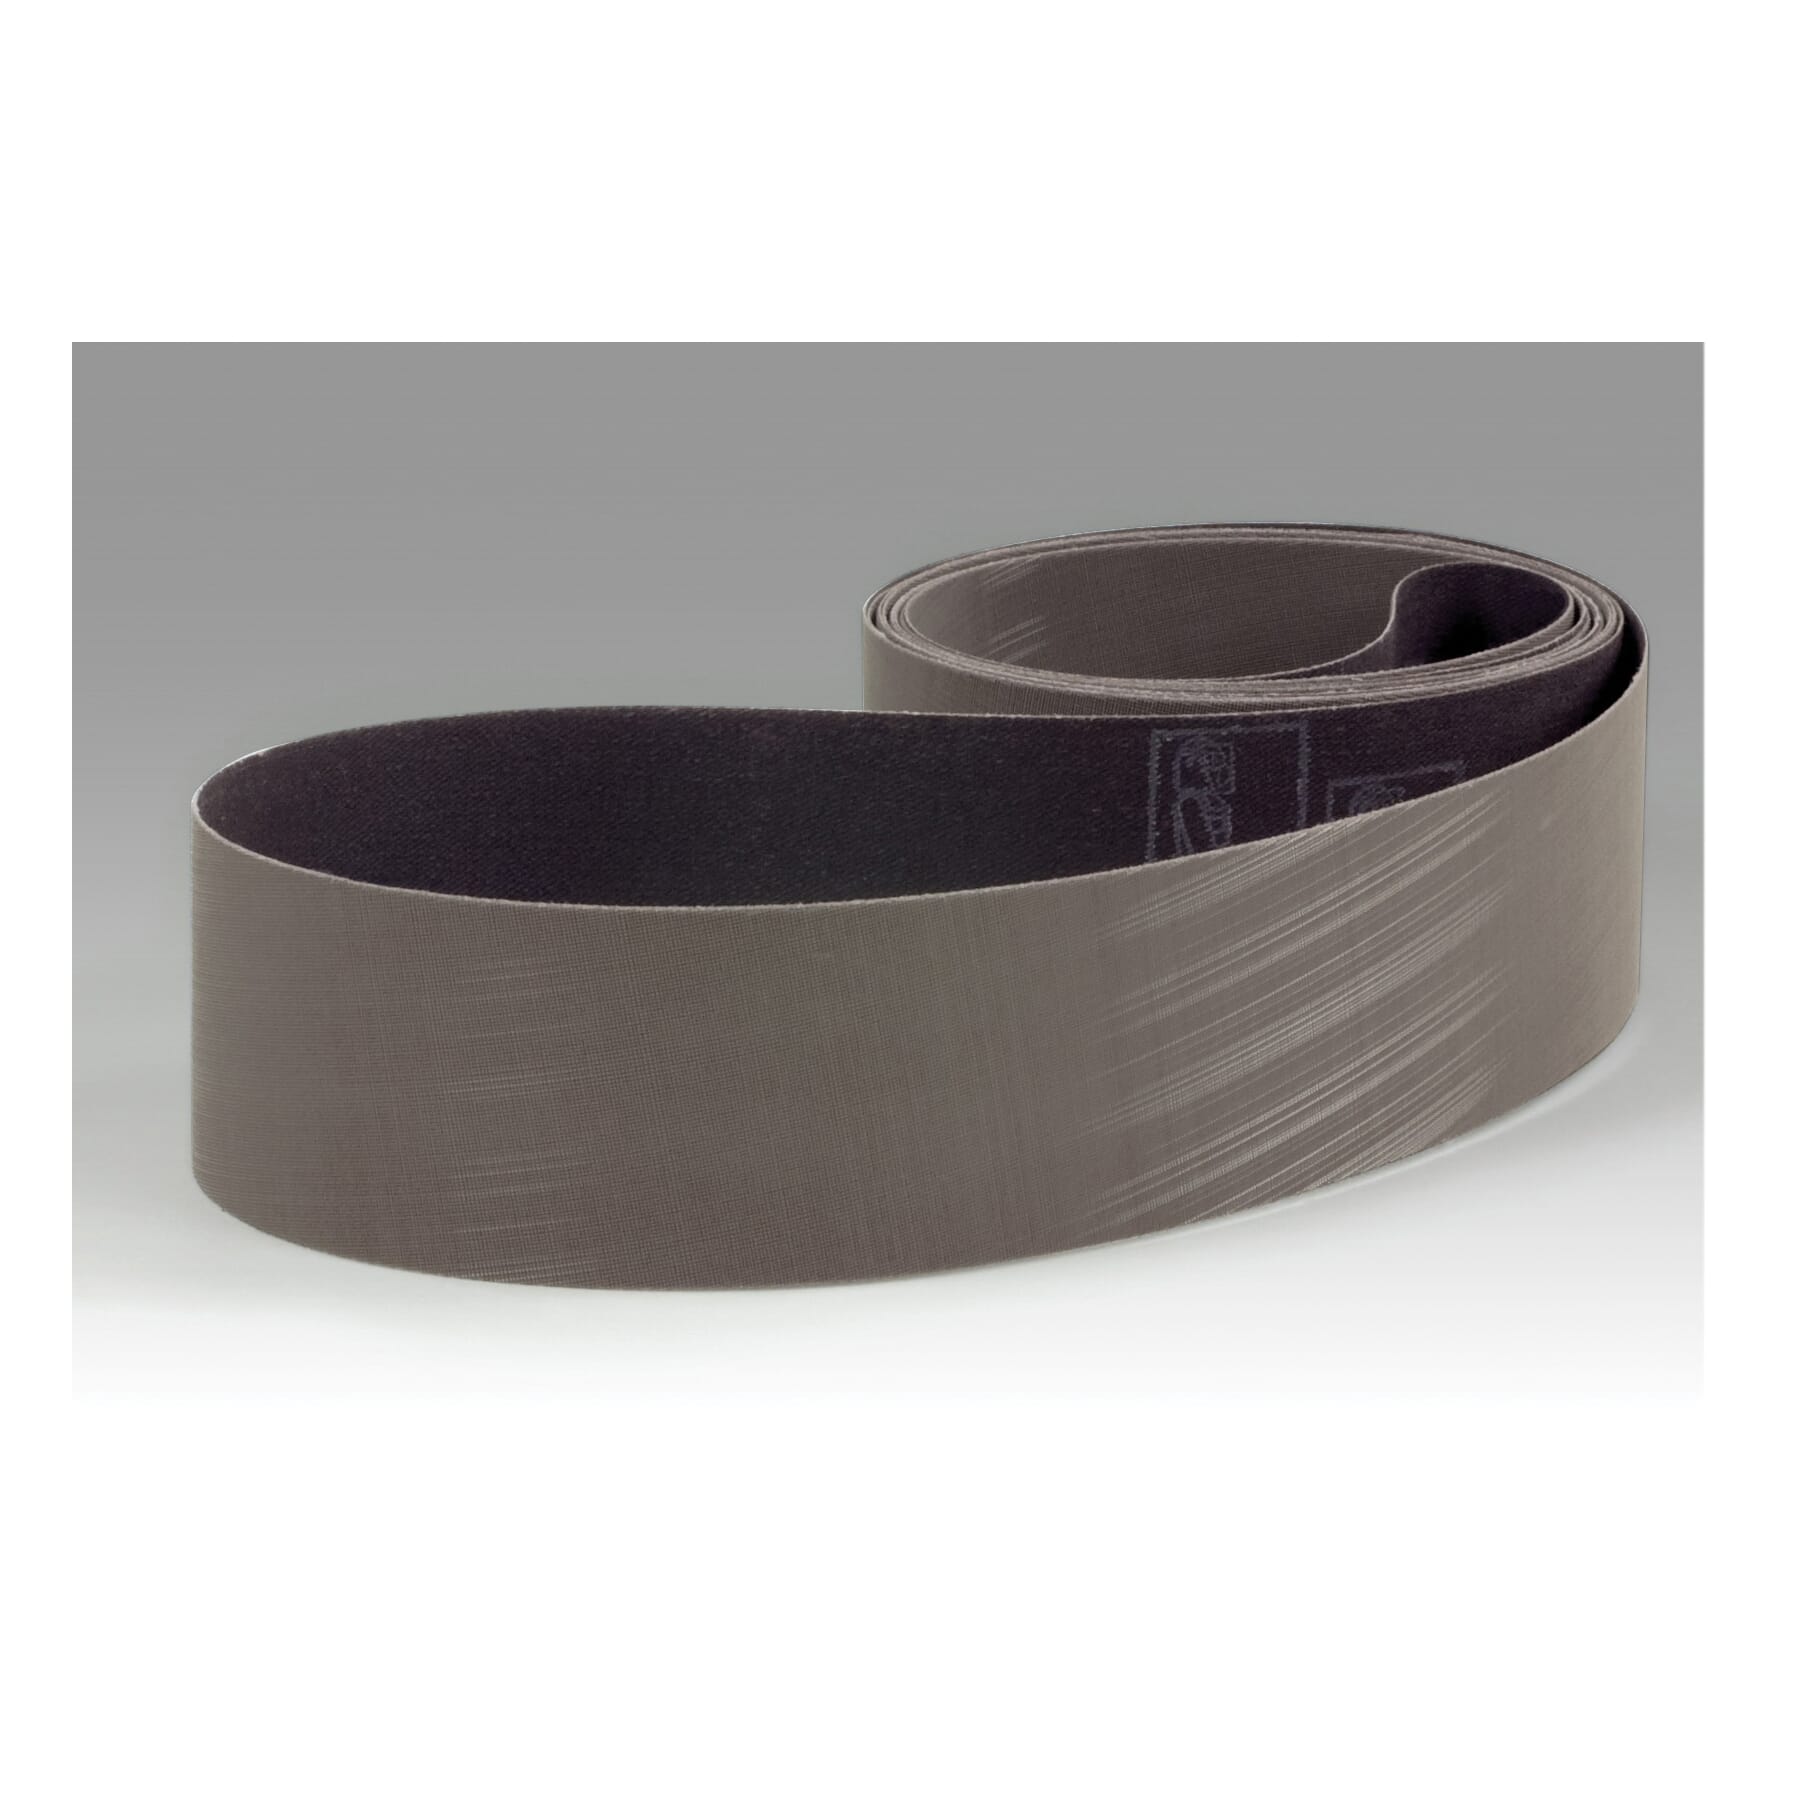 Trizact™ 7000120296 Fullflex Narrow Scalloped Coated Abrasive Belt, 4 in W Belt x 90 in L, A45 Grit, Extra Fine Grade, Cloth Backing